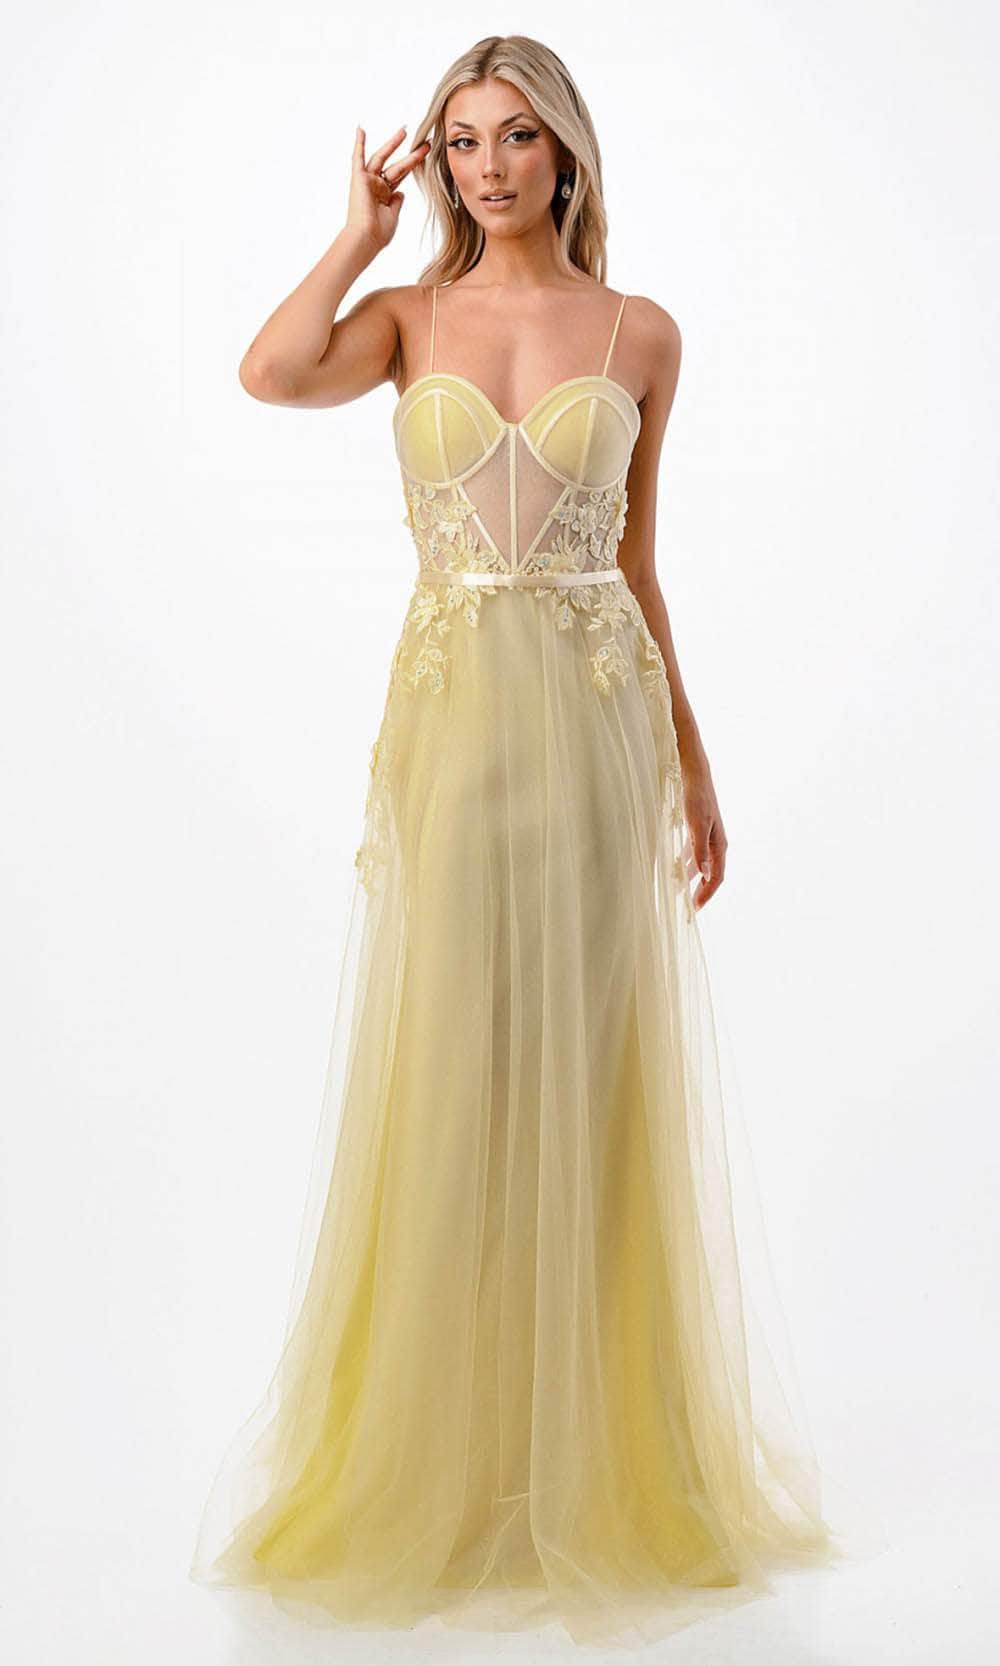 Image of Aspeed Design P2110 - Sleeveless Lace Applique Embellished Prom Dress